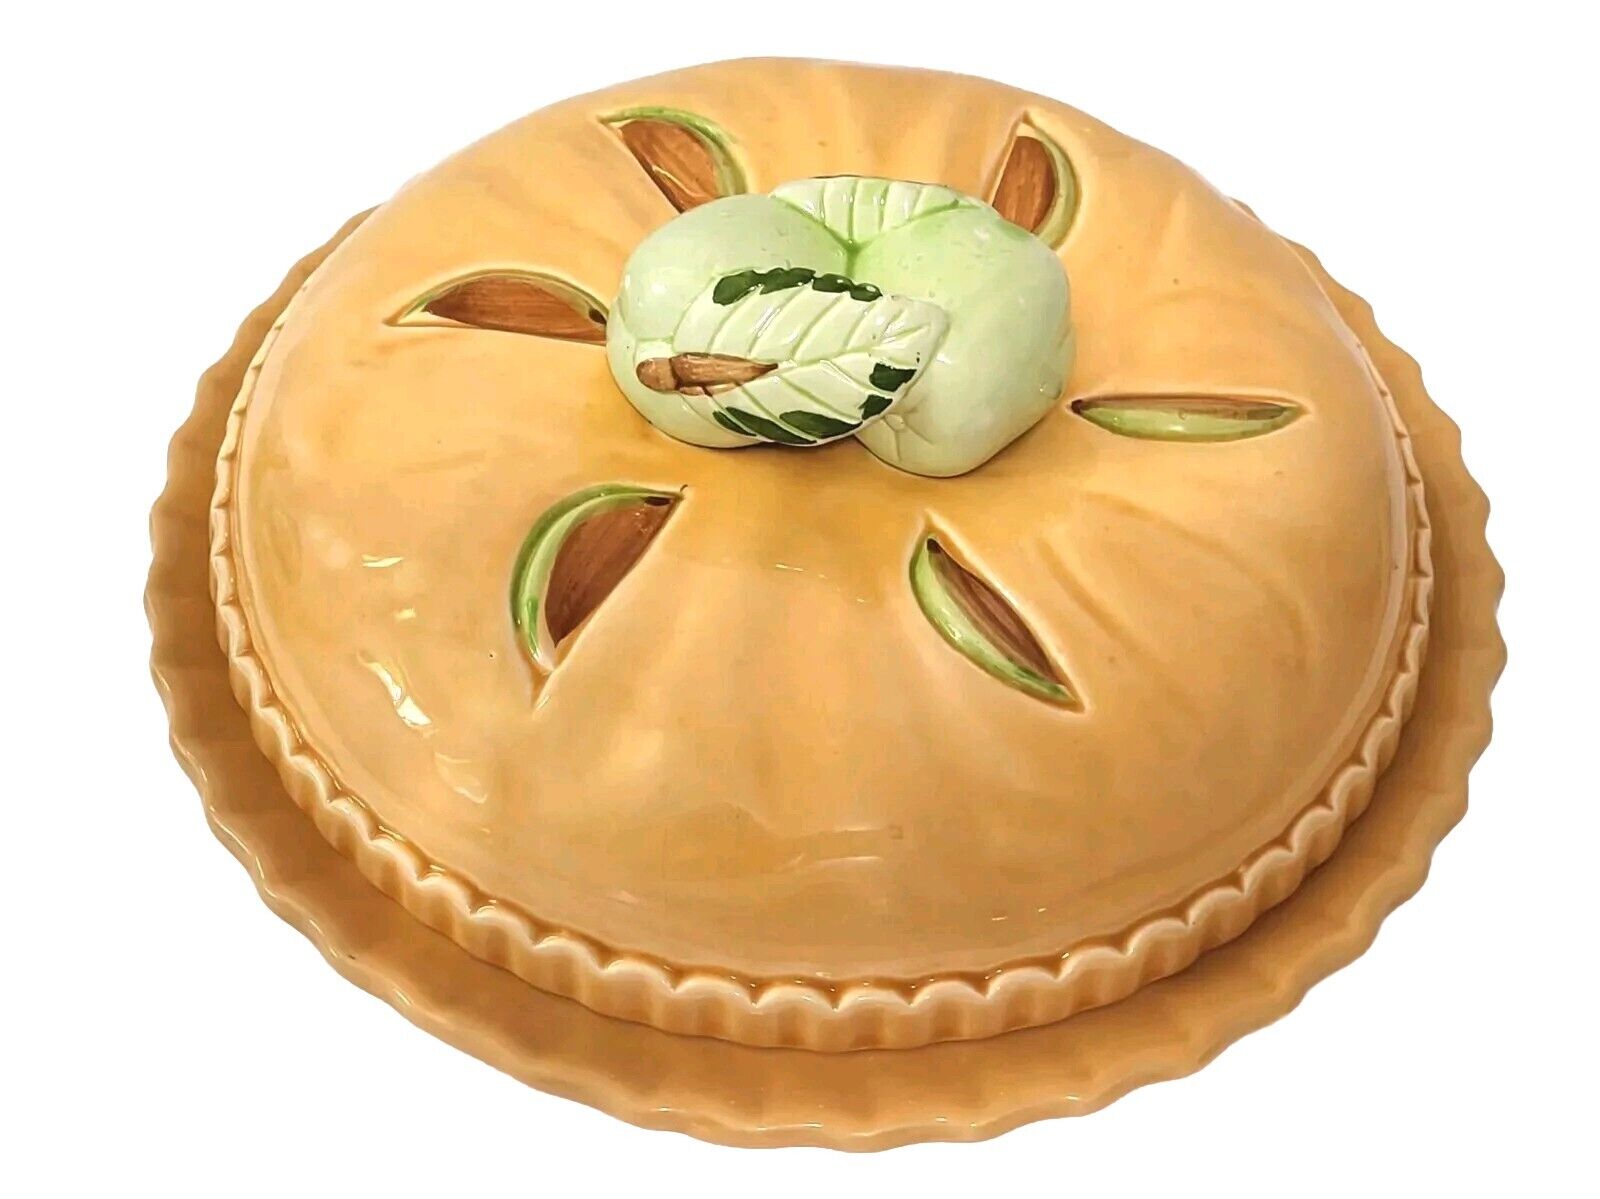 Betty Crocker Decorative Ceramic Apple Pie Dish & Cover Recipe Inside